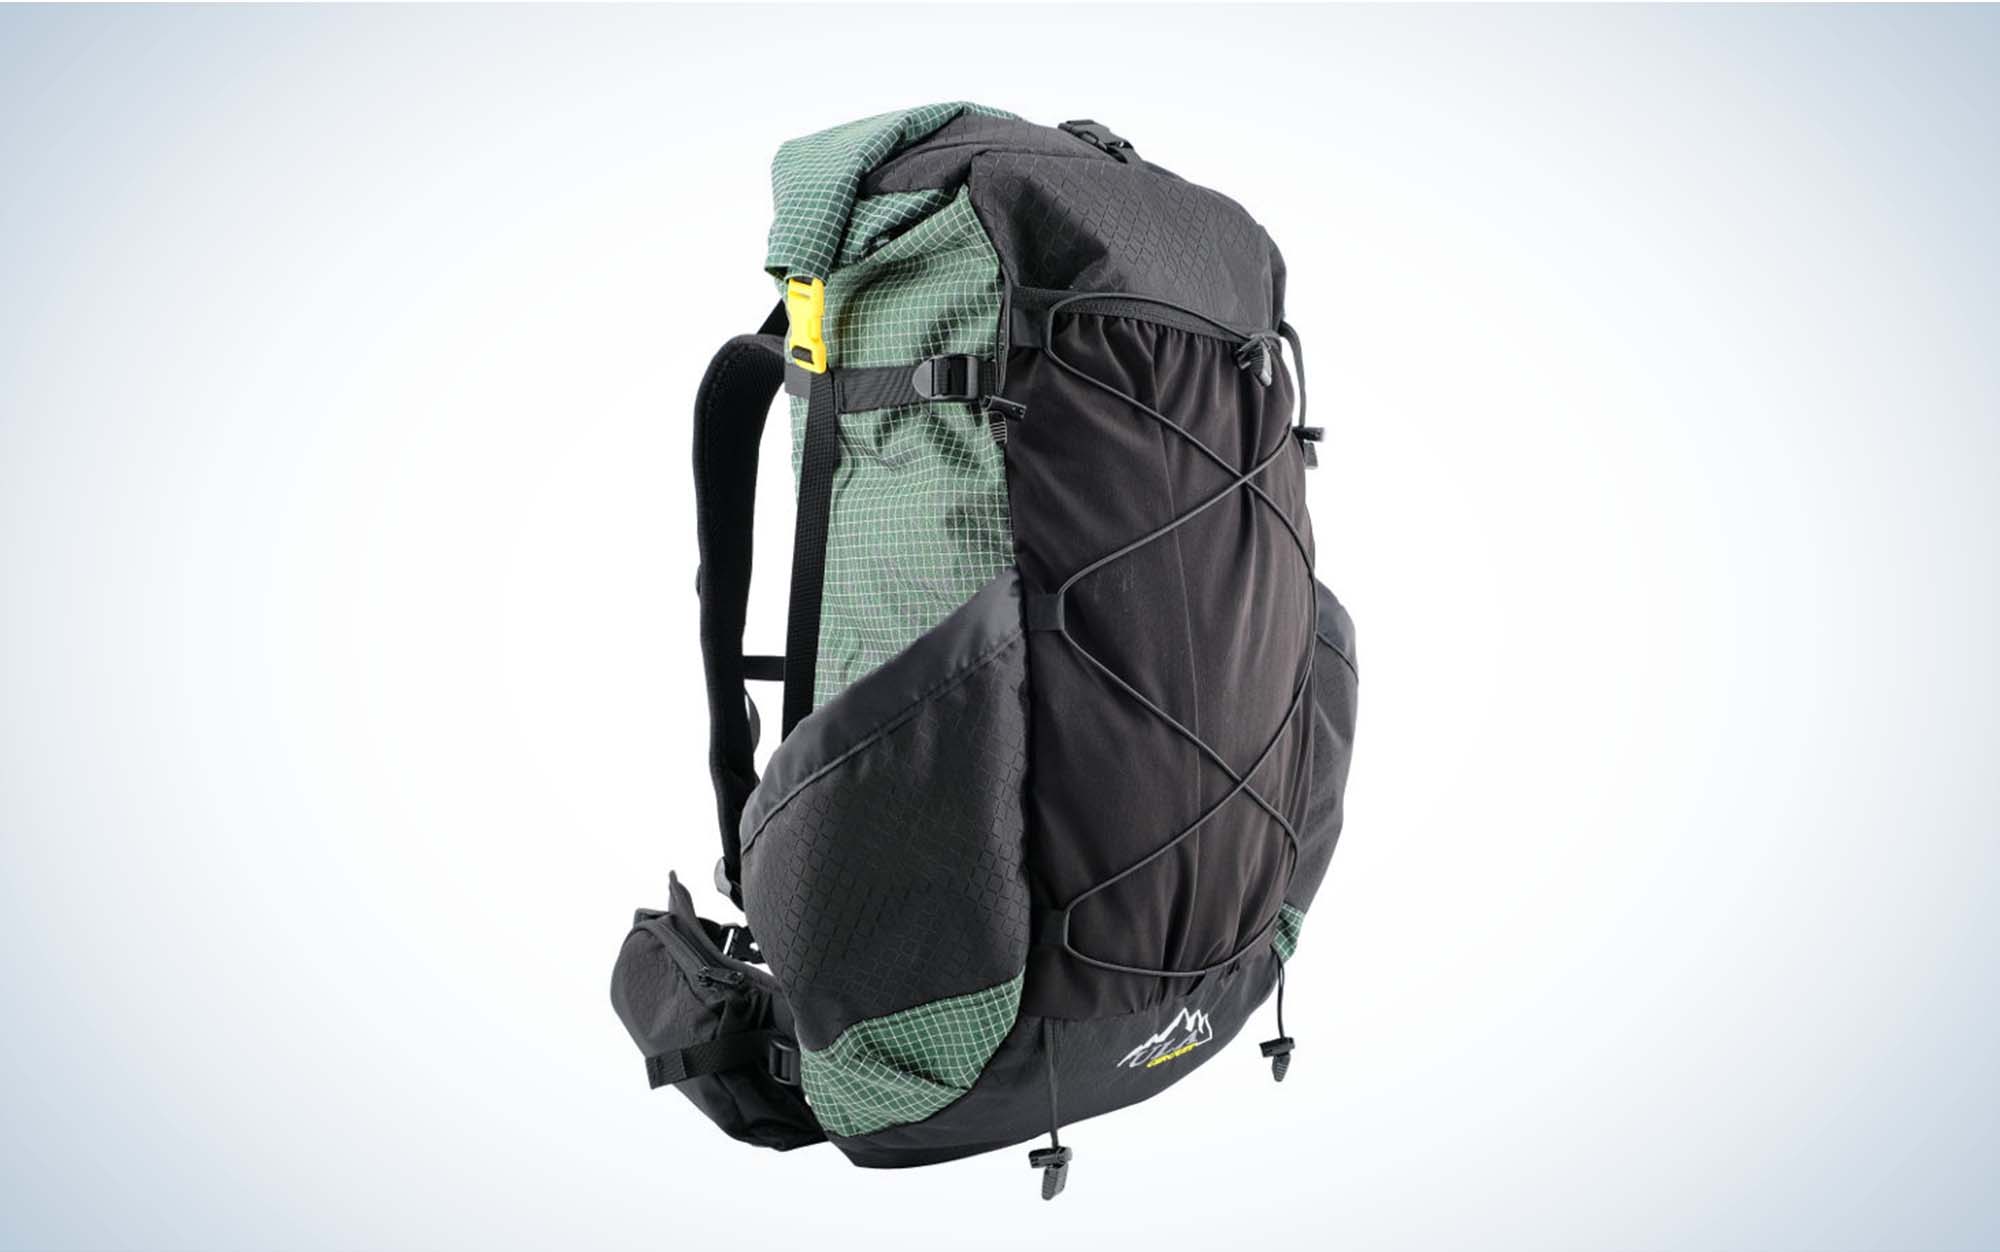 The best overall ultralight backpack